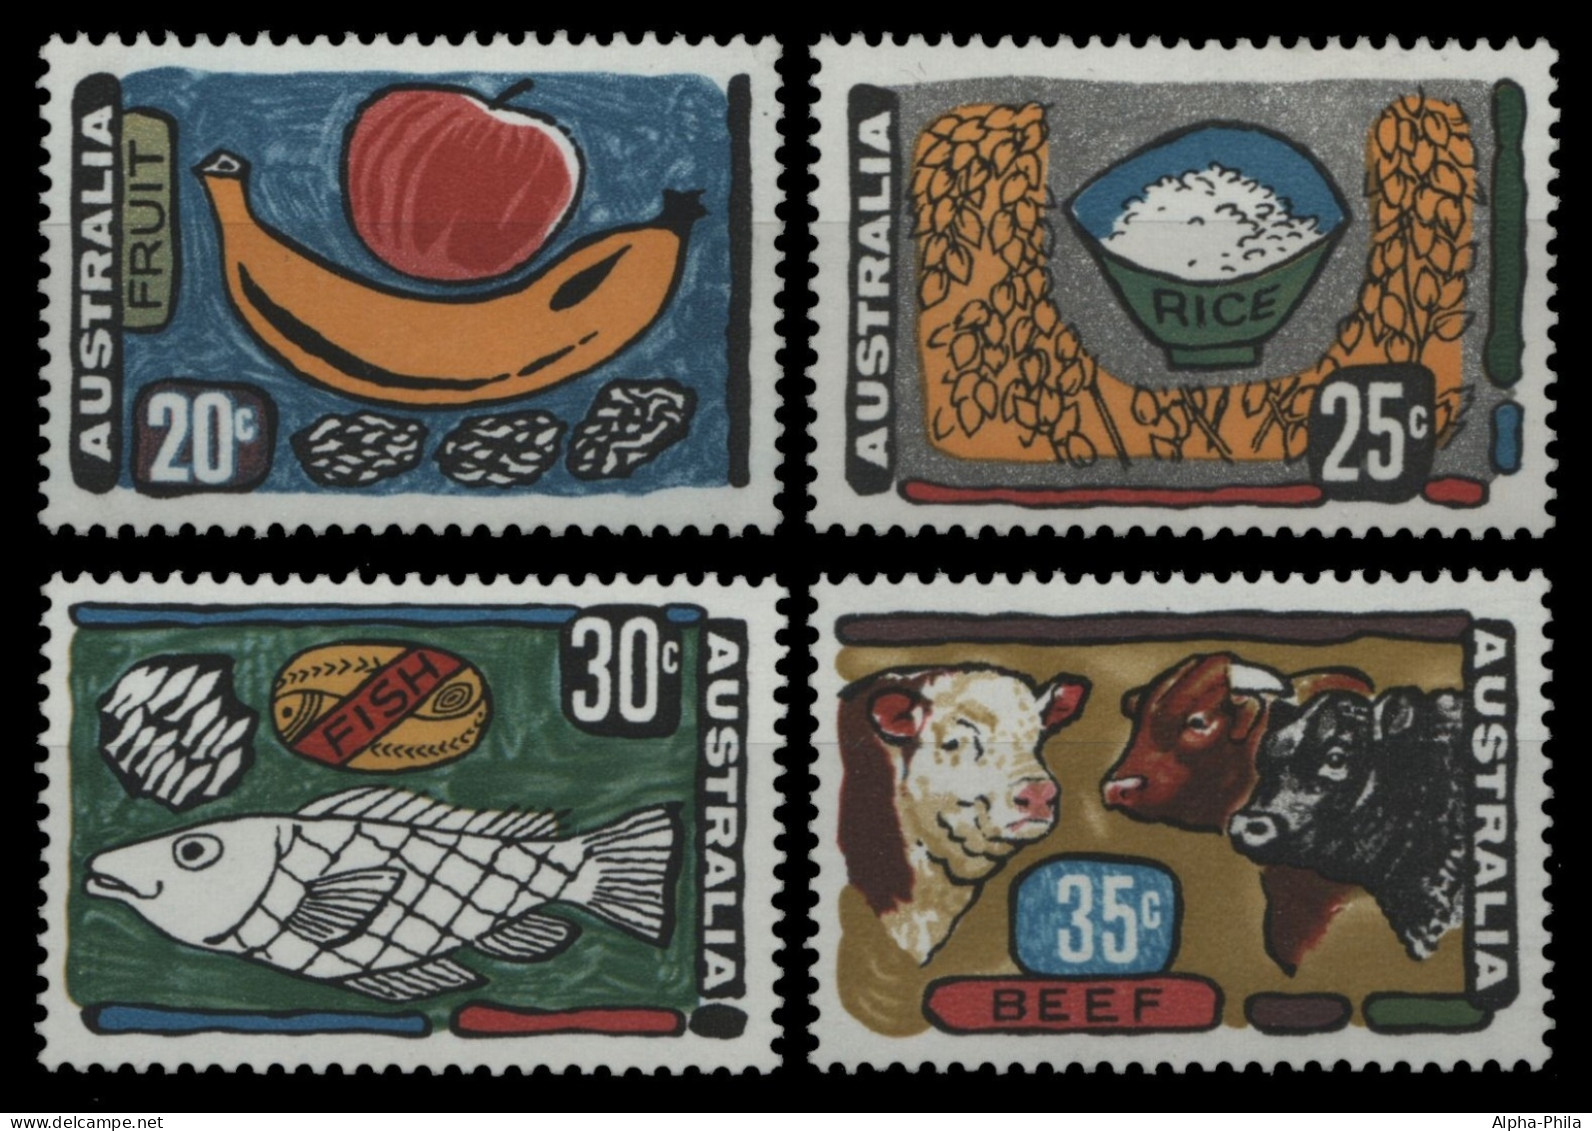 Australien 1972 - Mi-Nr. 491-494 ** - MNH - Grundstoffindustrie - Mint Stamps